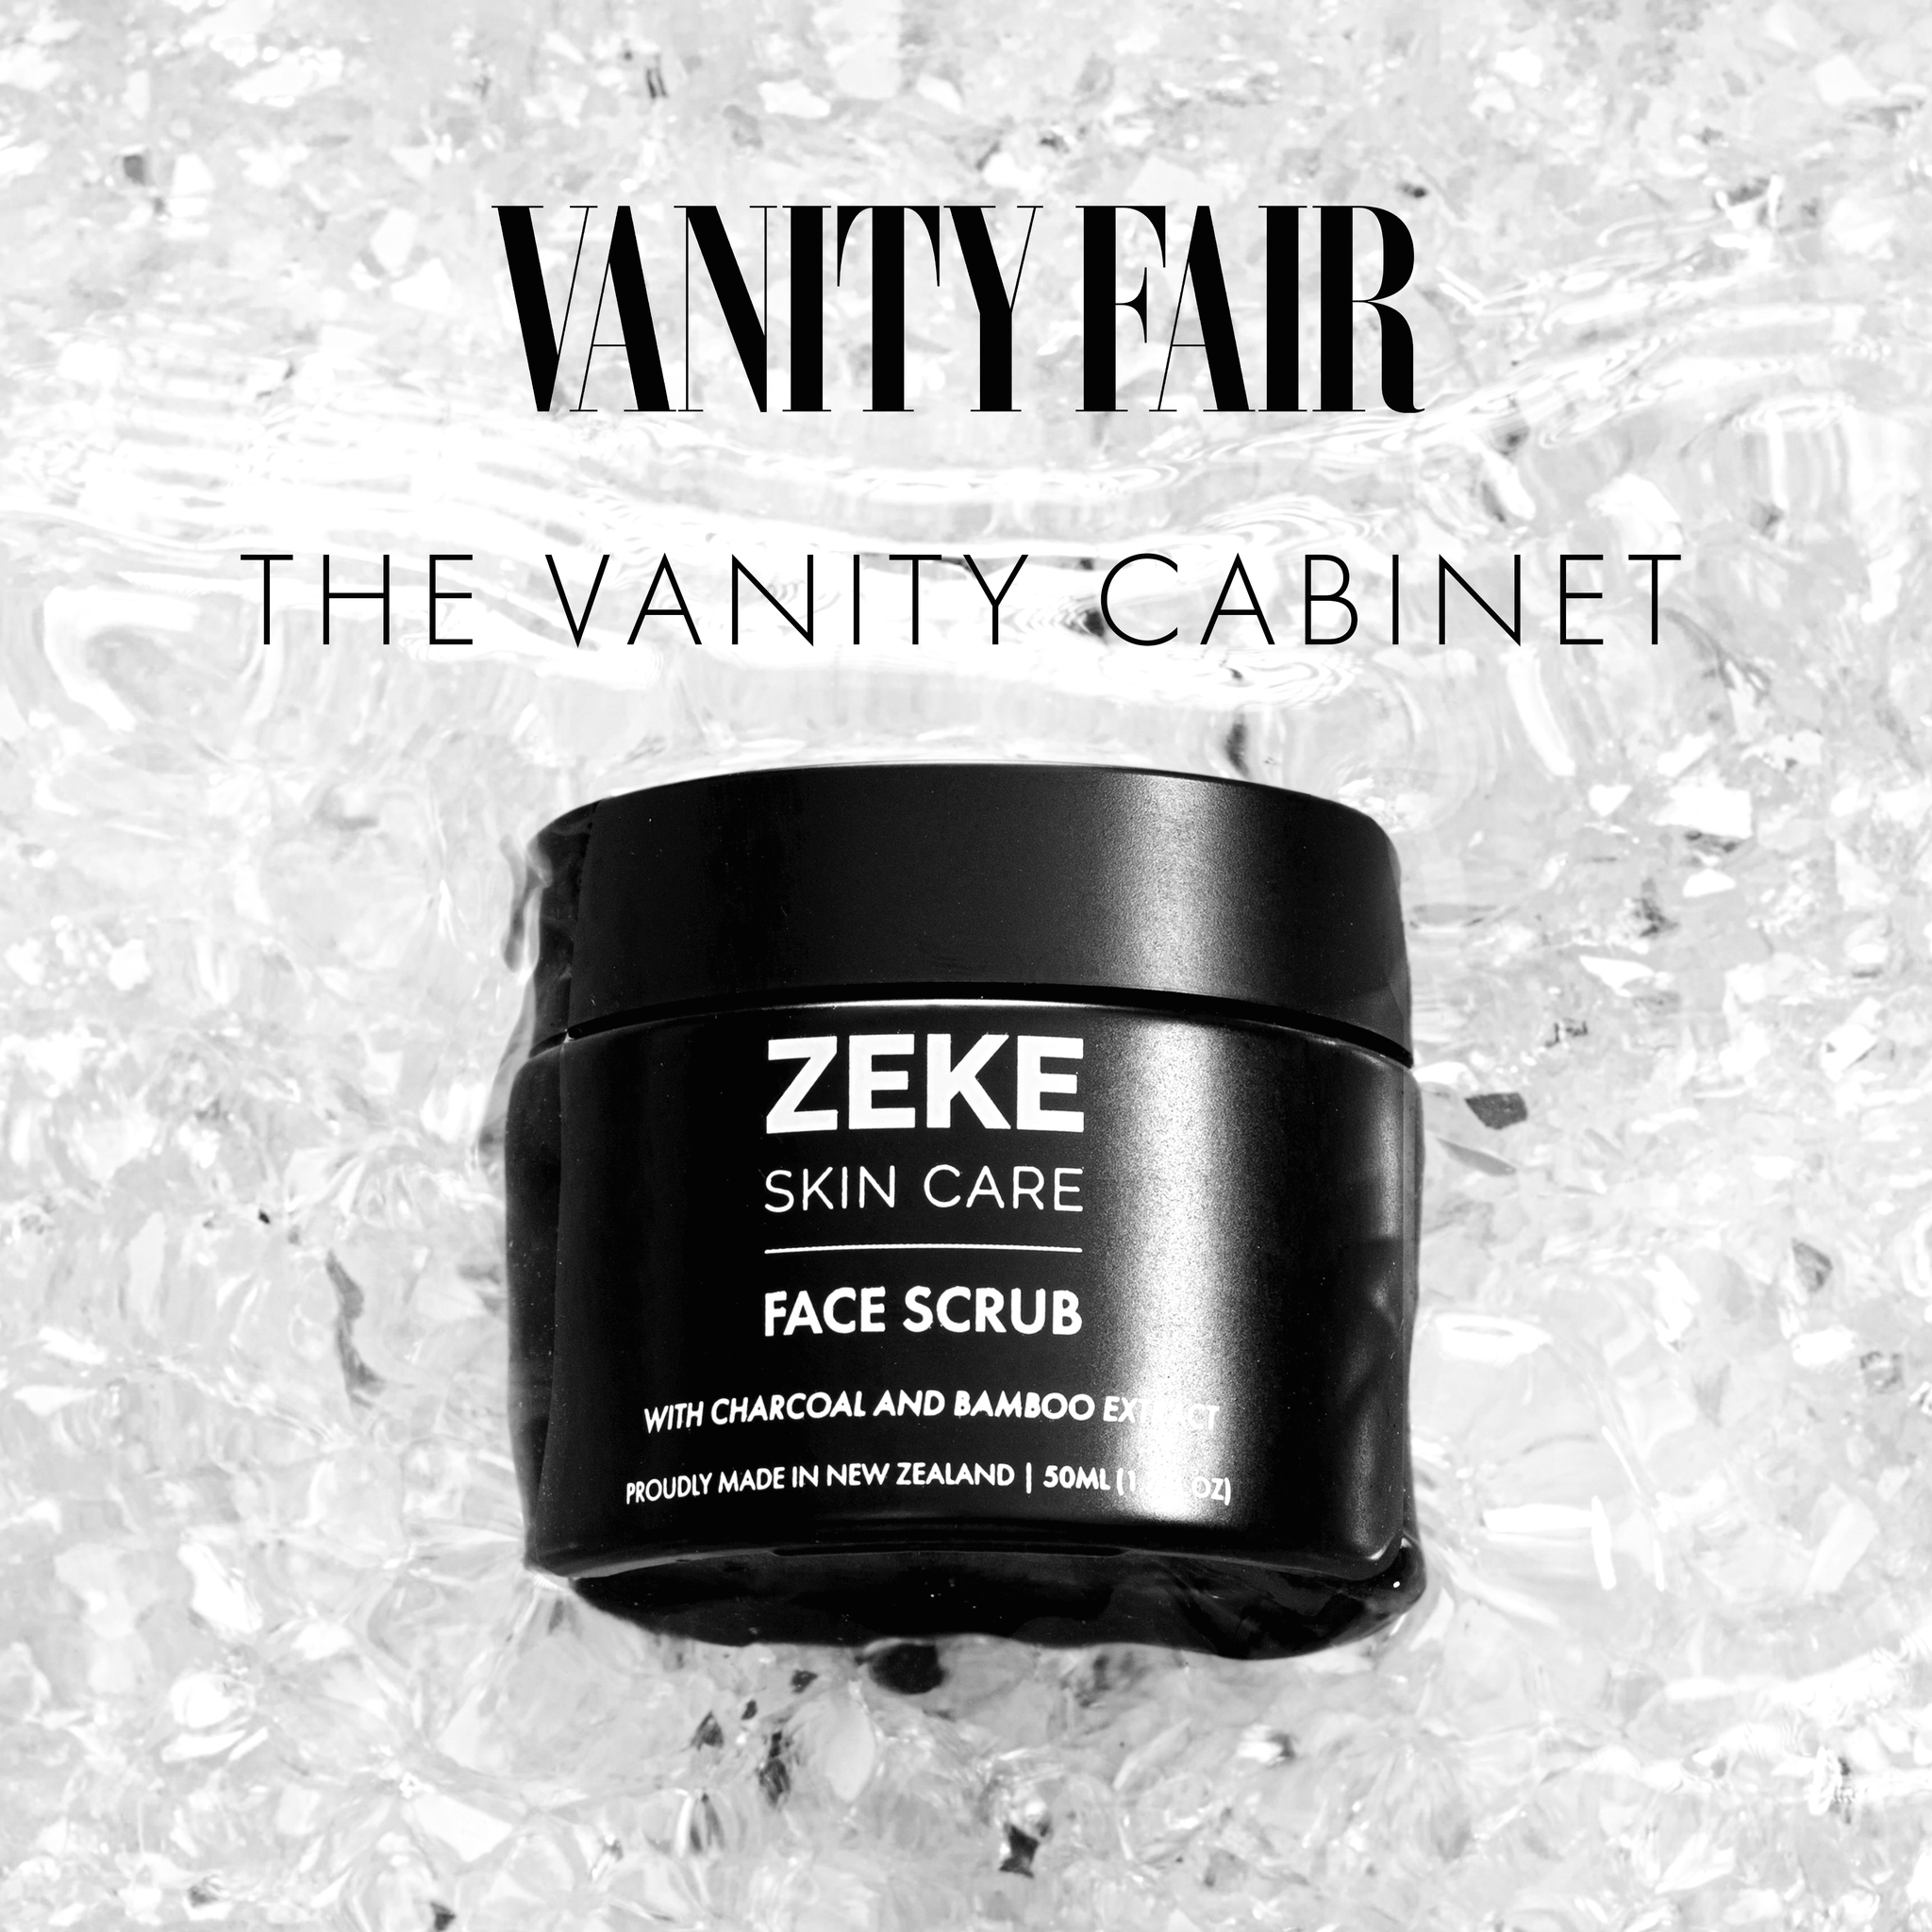 Zeke Skincare Featured in Vanity Fair